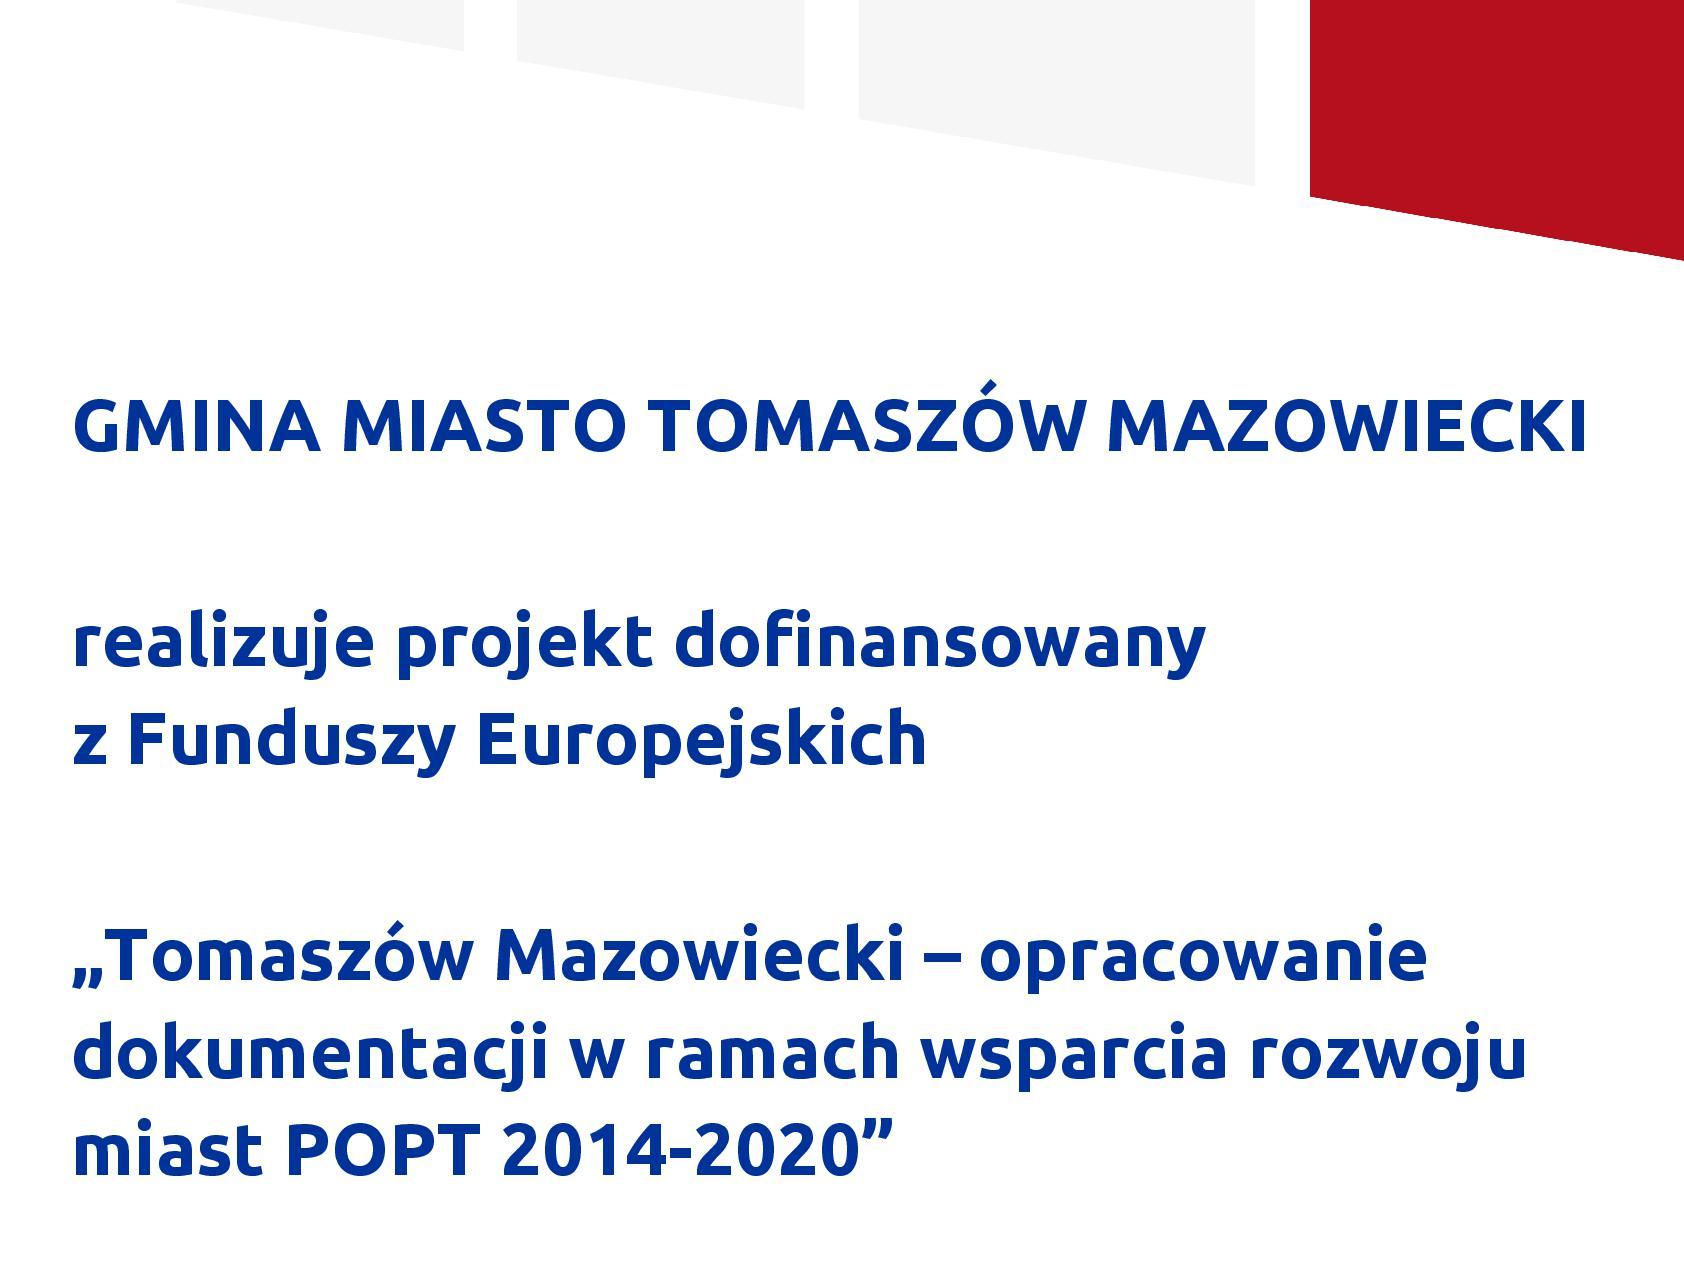 POPT 2014-2020